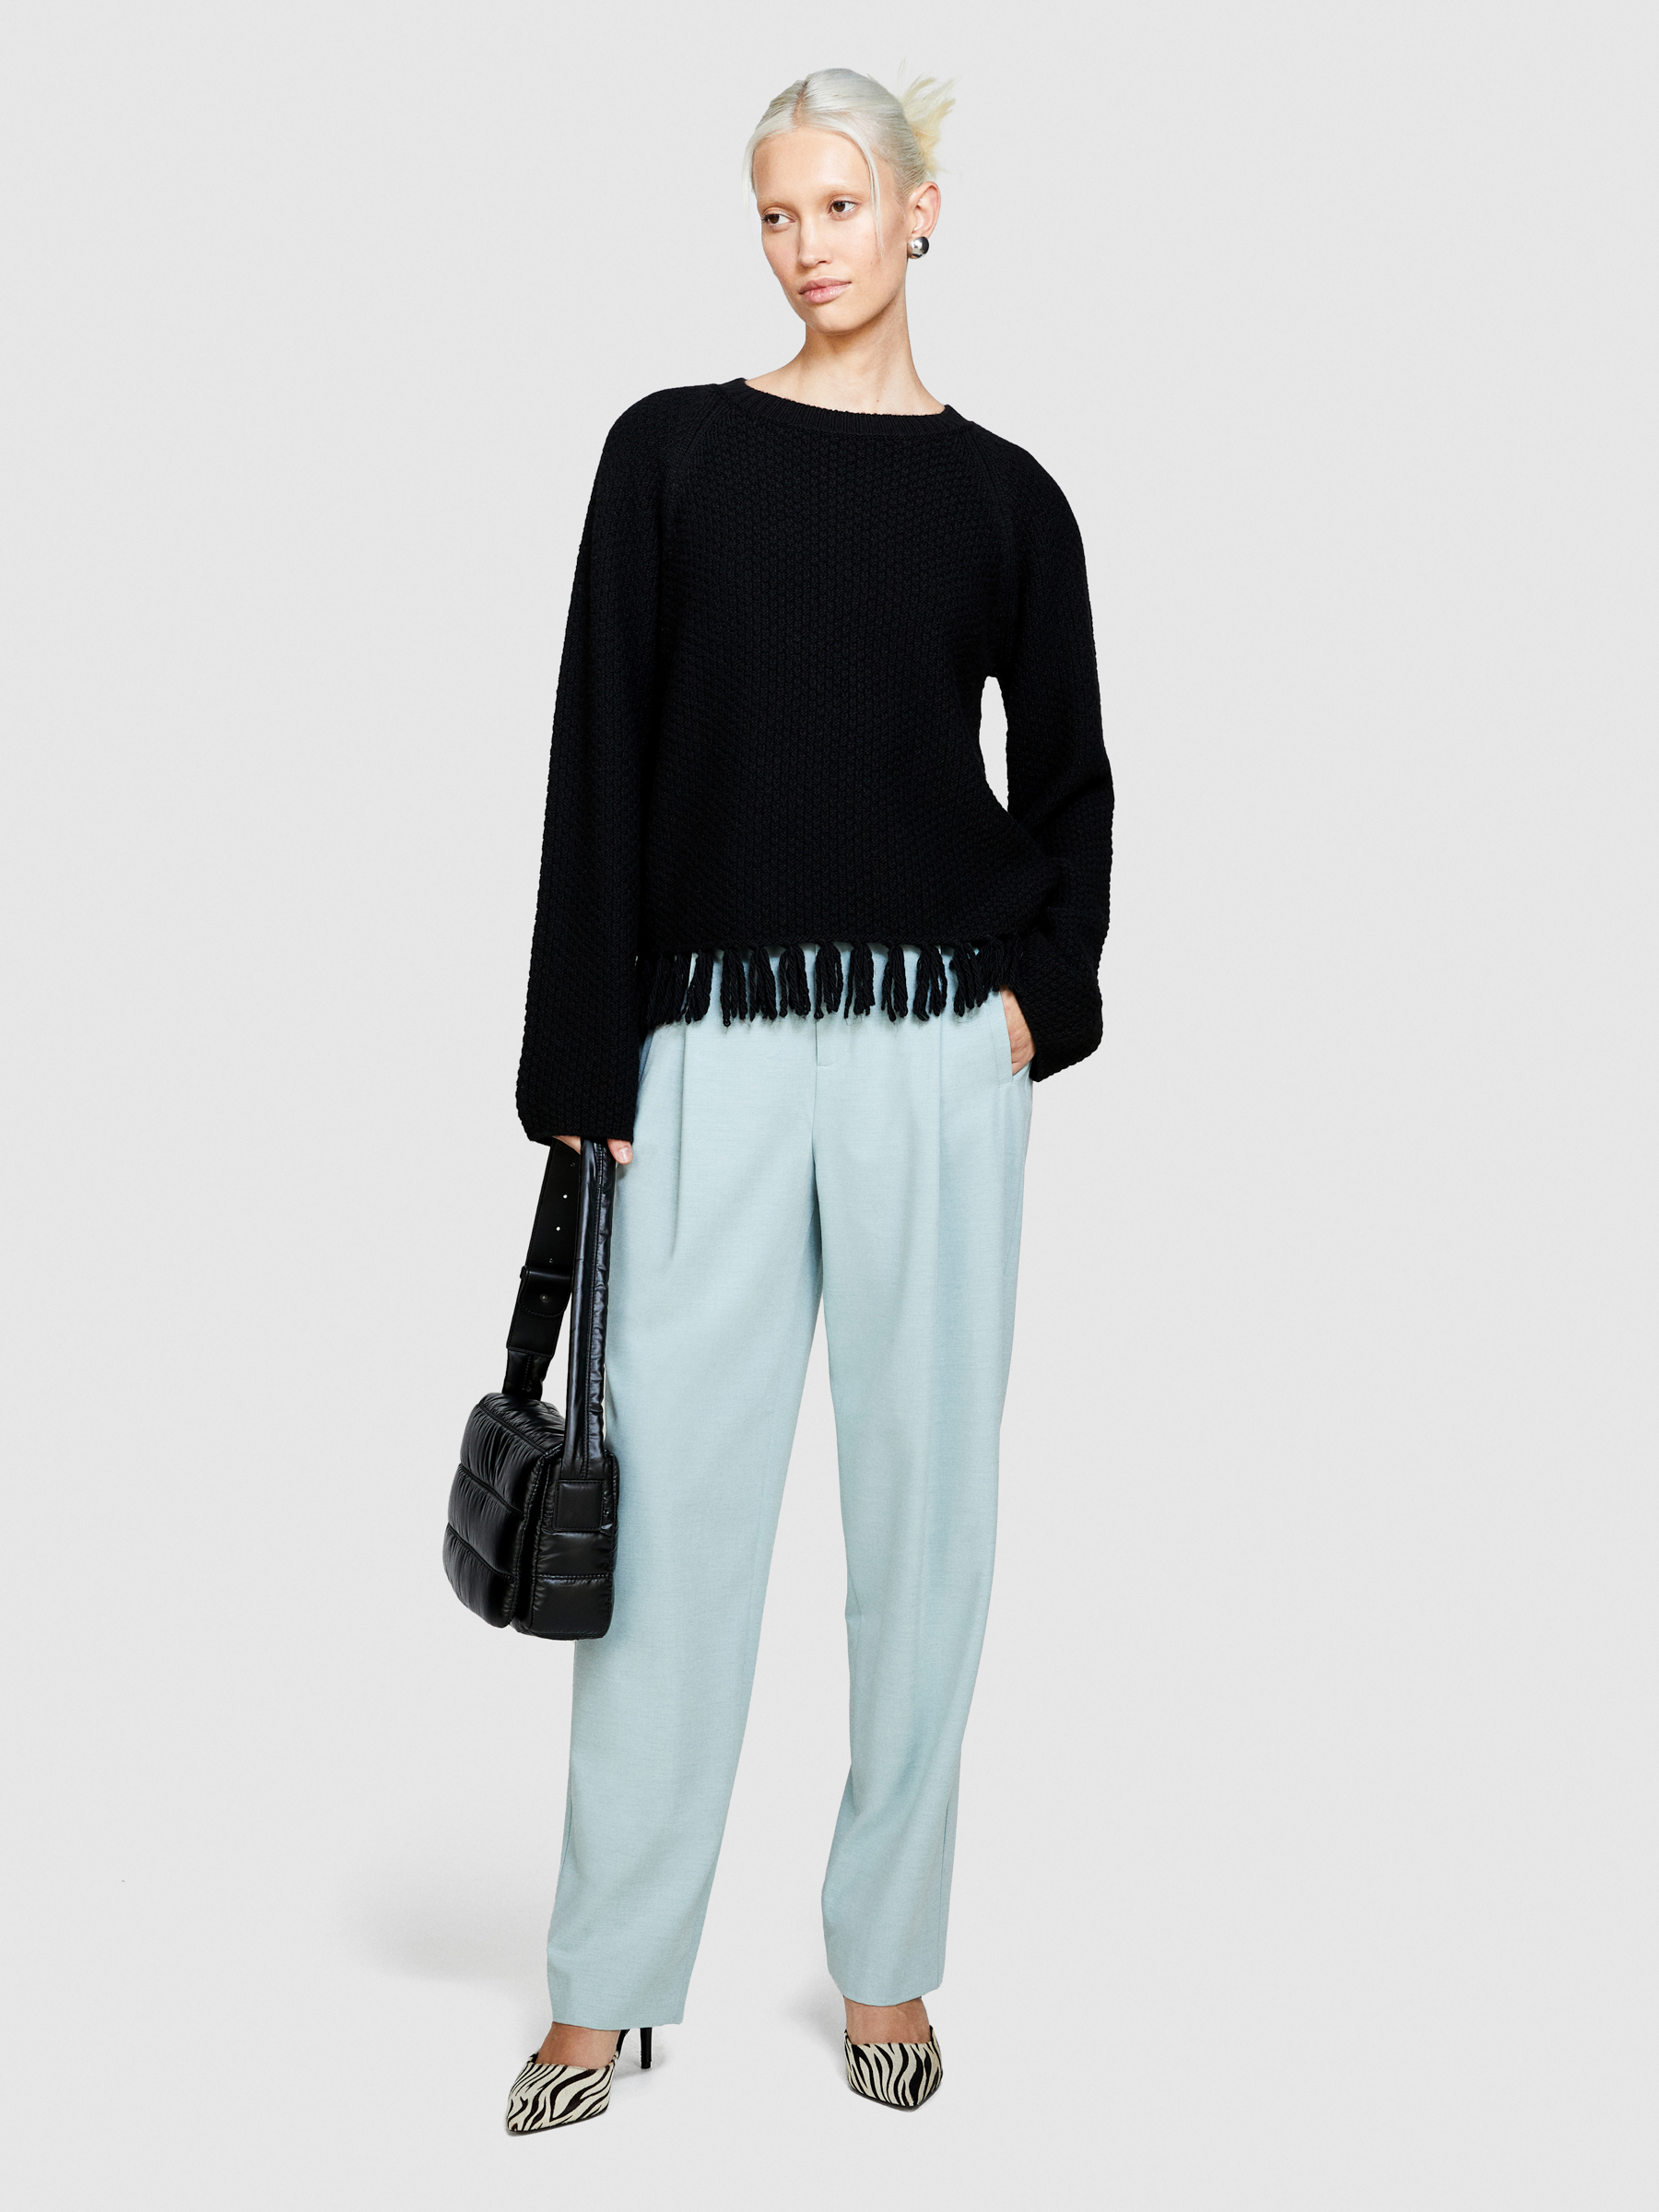 Sisley - Sweater With Fringe, Woman, Black, Size: S